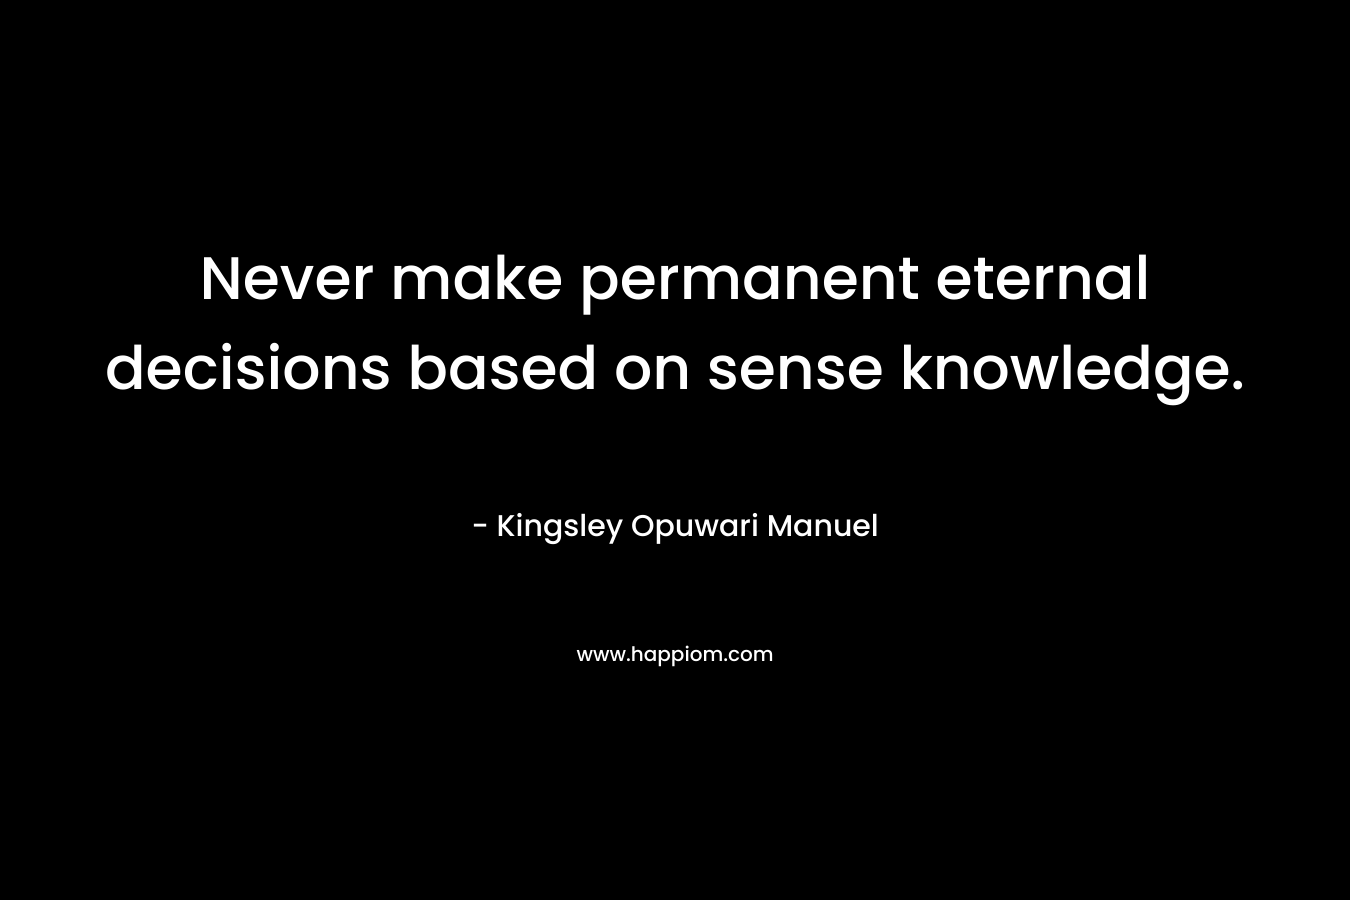 Never make permanent eternal decisions based on sense knowledge. – Kingsley Opuwari Manuel